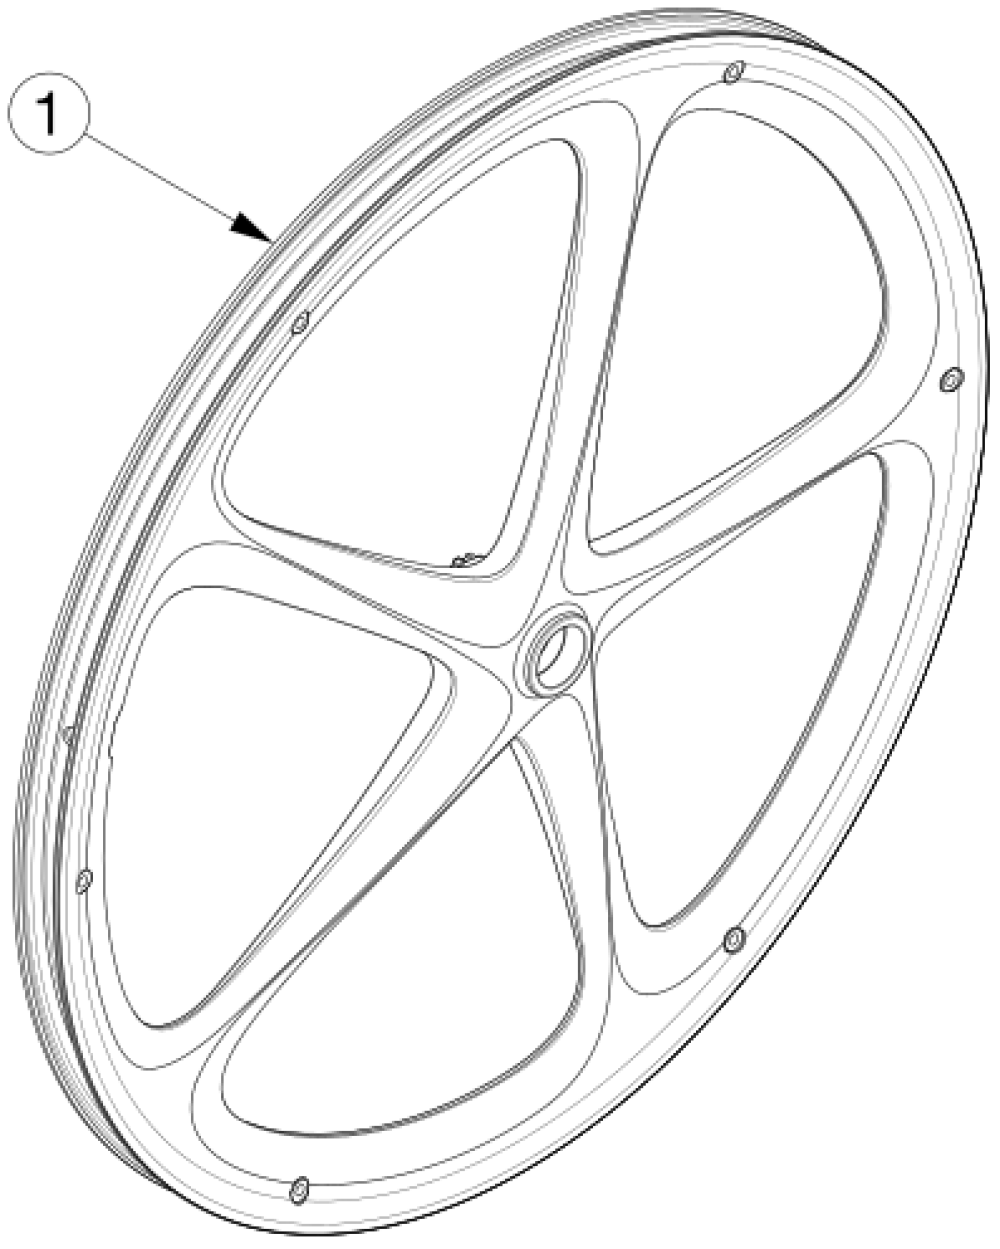 Cr45 Wheels - Maxx Mag parts diagram